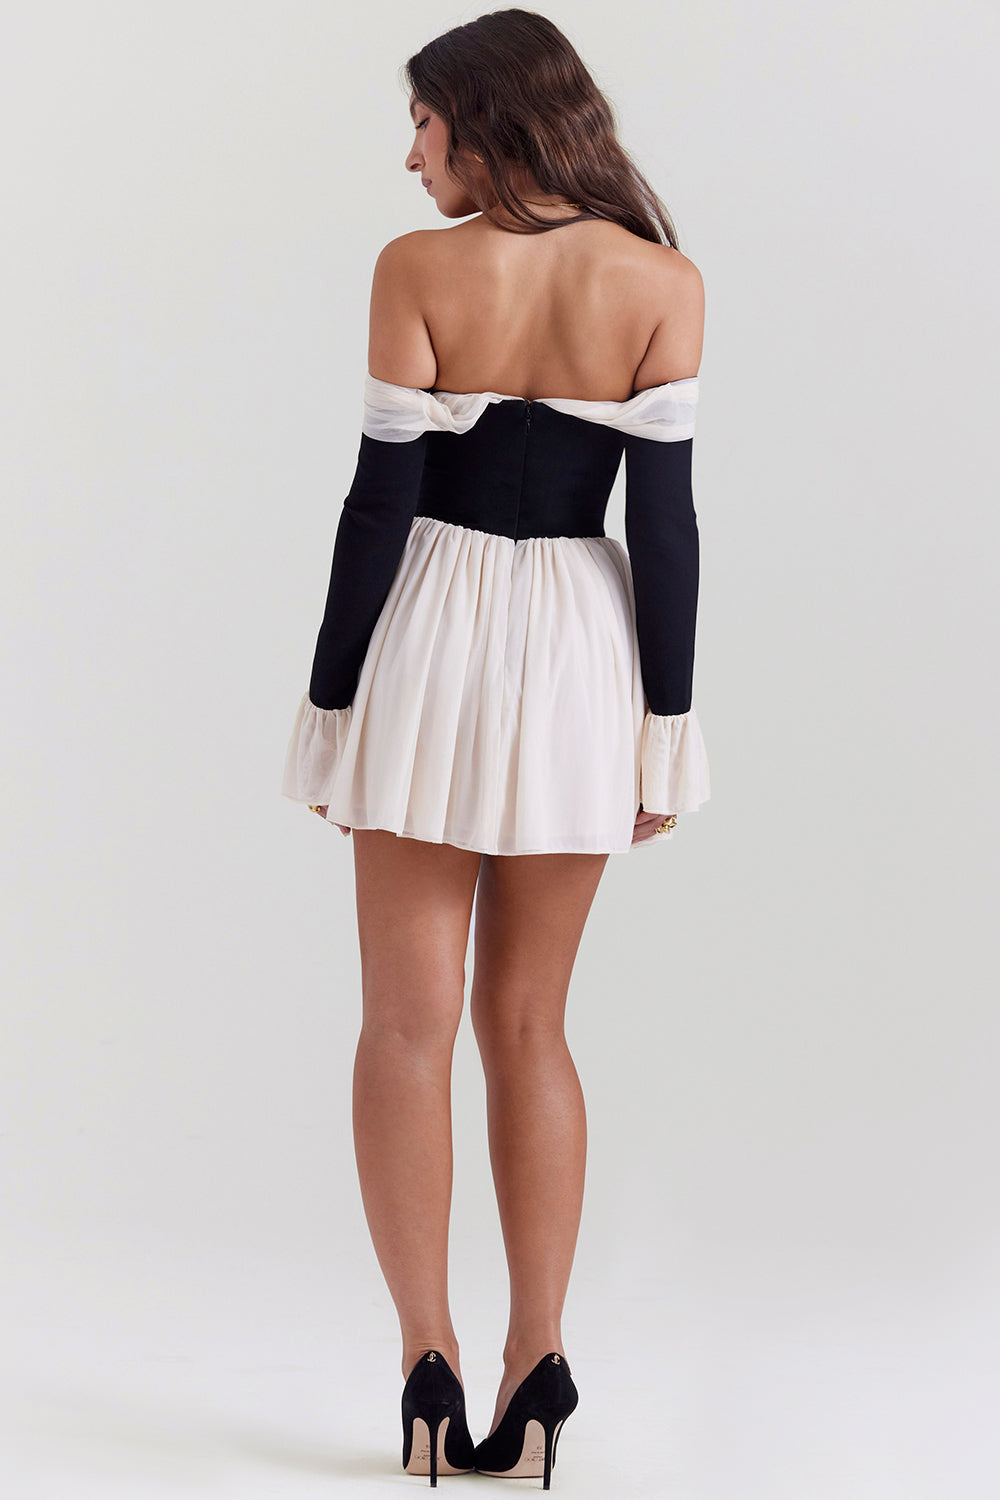 Hire HOUSE OF CB Alana Black & Cream Off Shoulder Mini Dress